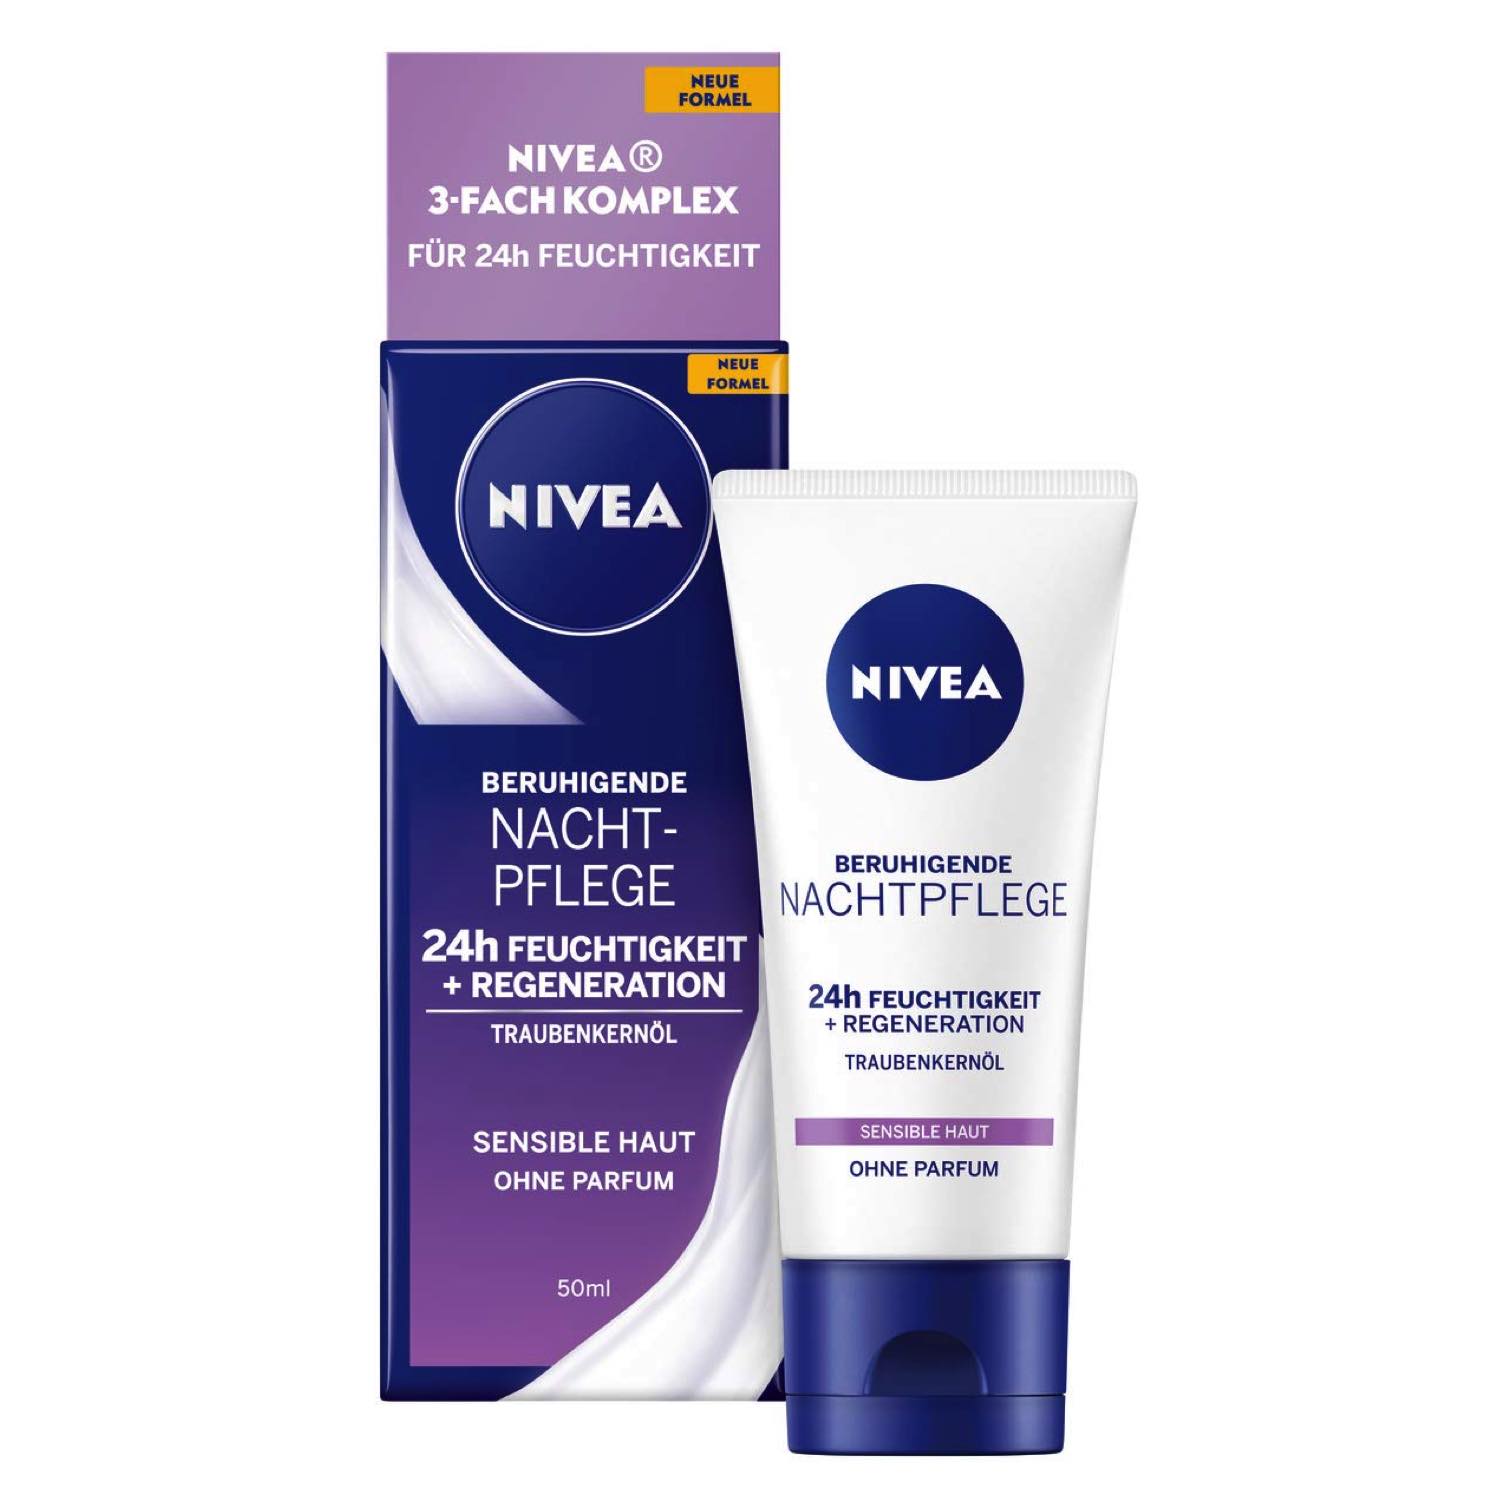 NIVEA Beruhigende Nachtpflege 24h Feuchtigkeit Regeneration für sensible Haut